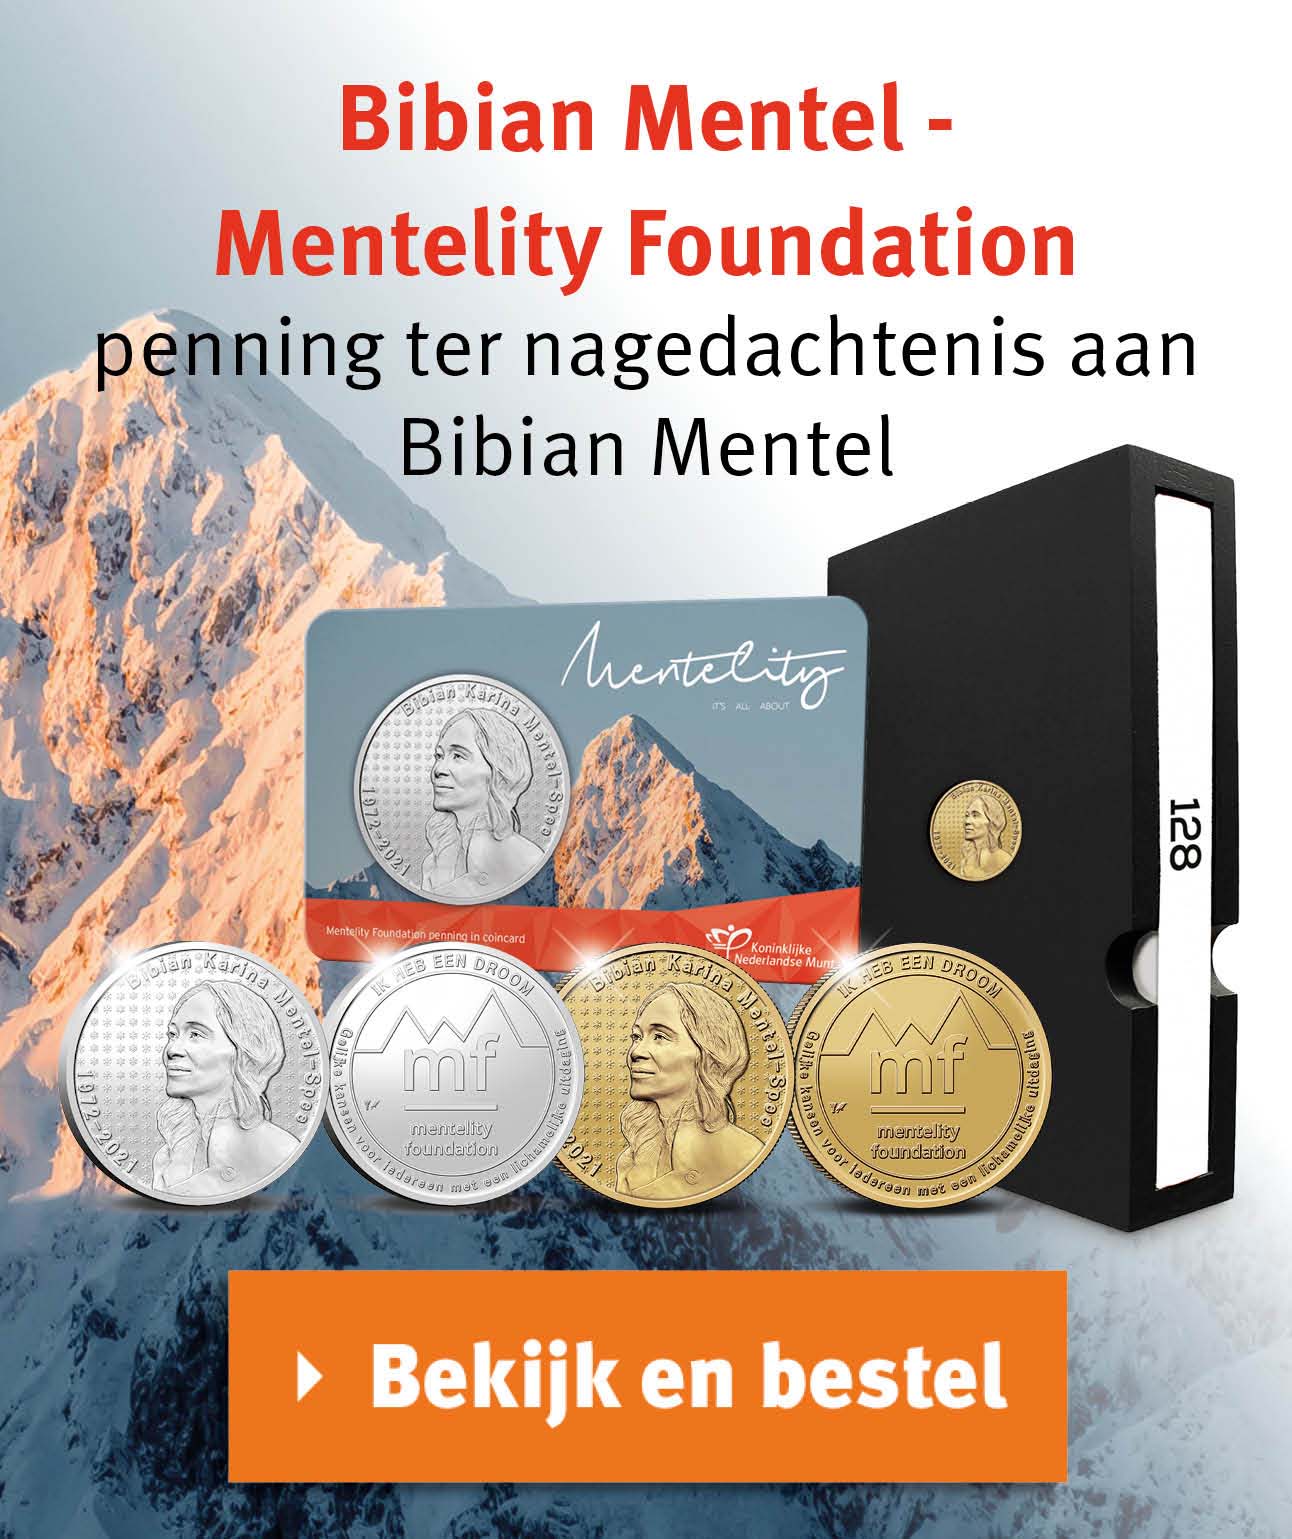 Bekijk en bestel: Mentelity Foundation coincard